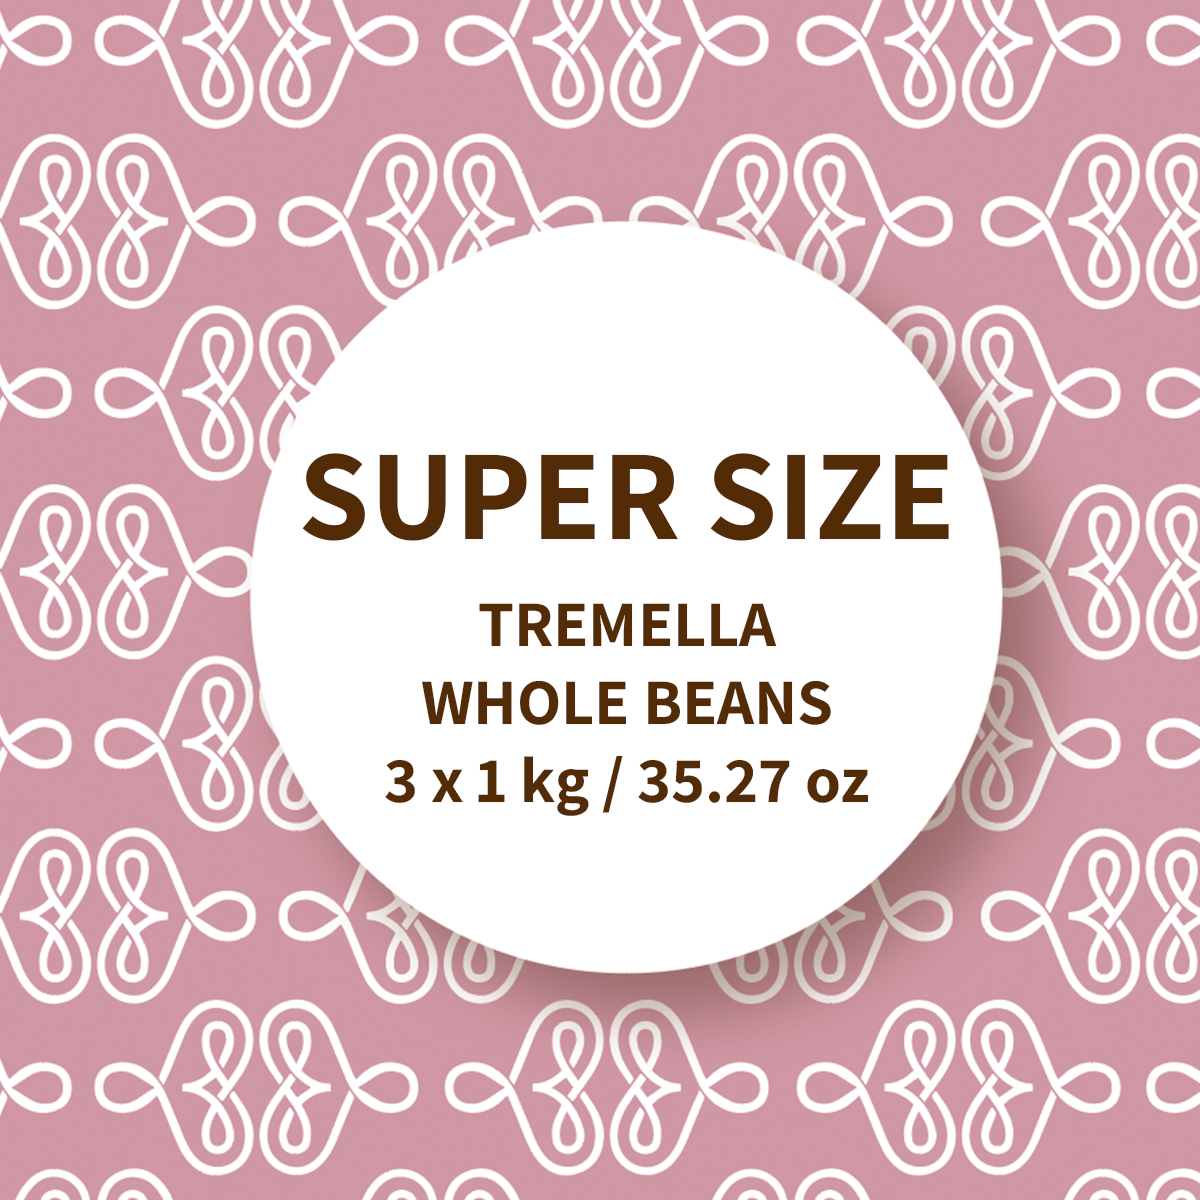 Supersize Tremella Mushroom Coffee (former Beauty) Pack 3 x 1 kg / 35.27 oz